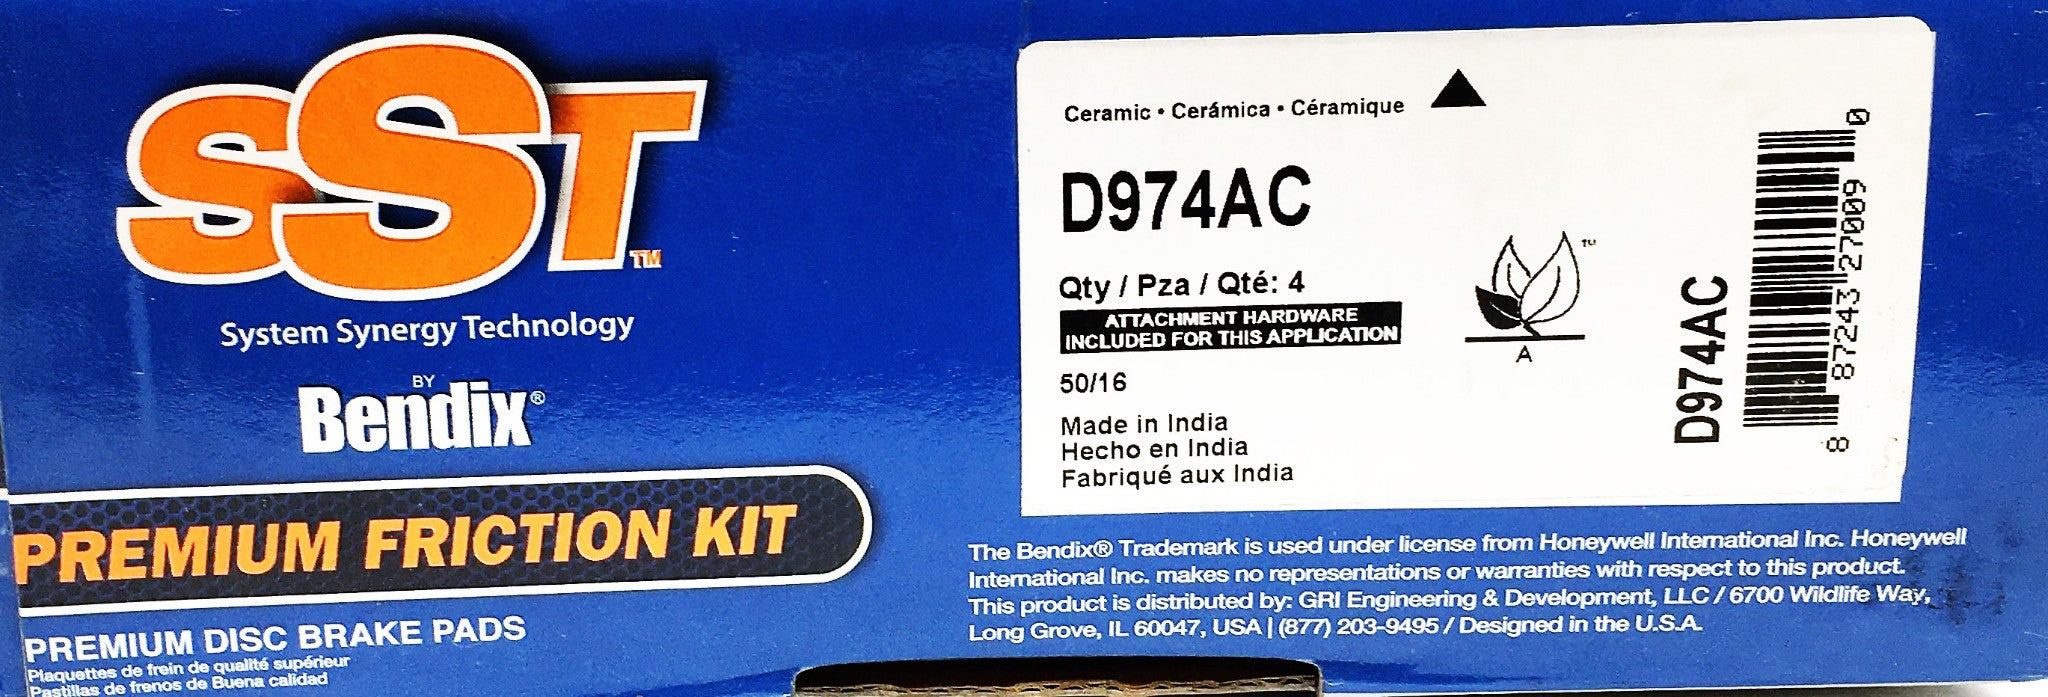 Bendix SST Premium Friction Kit Ceramic Disc Brake Pads D974AC NOS